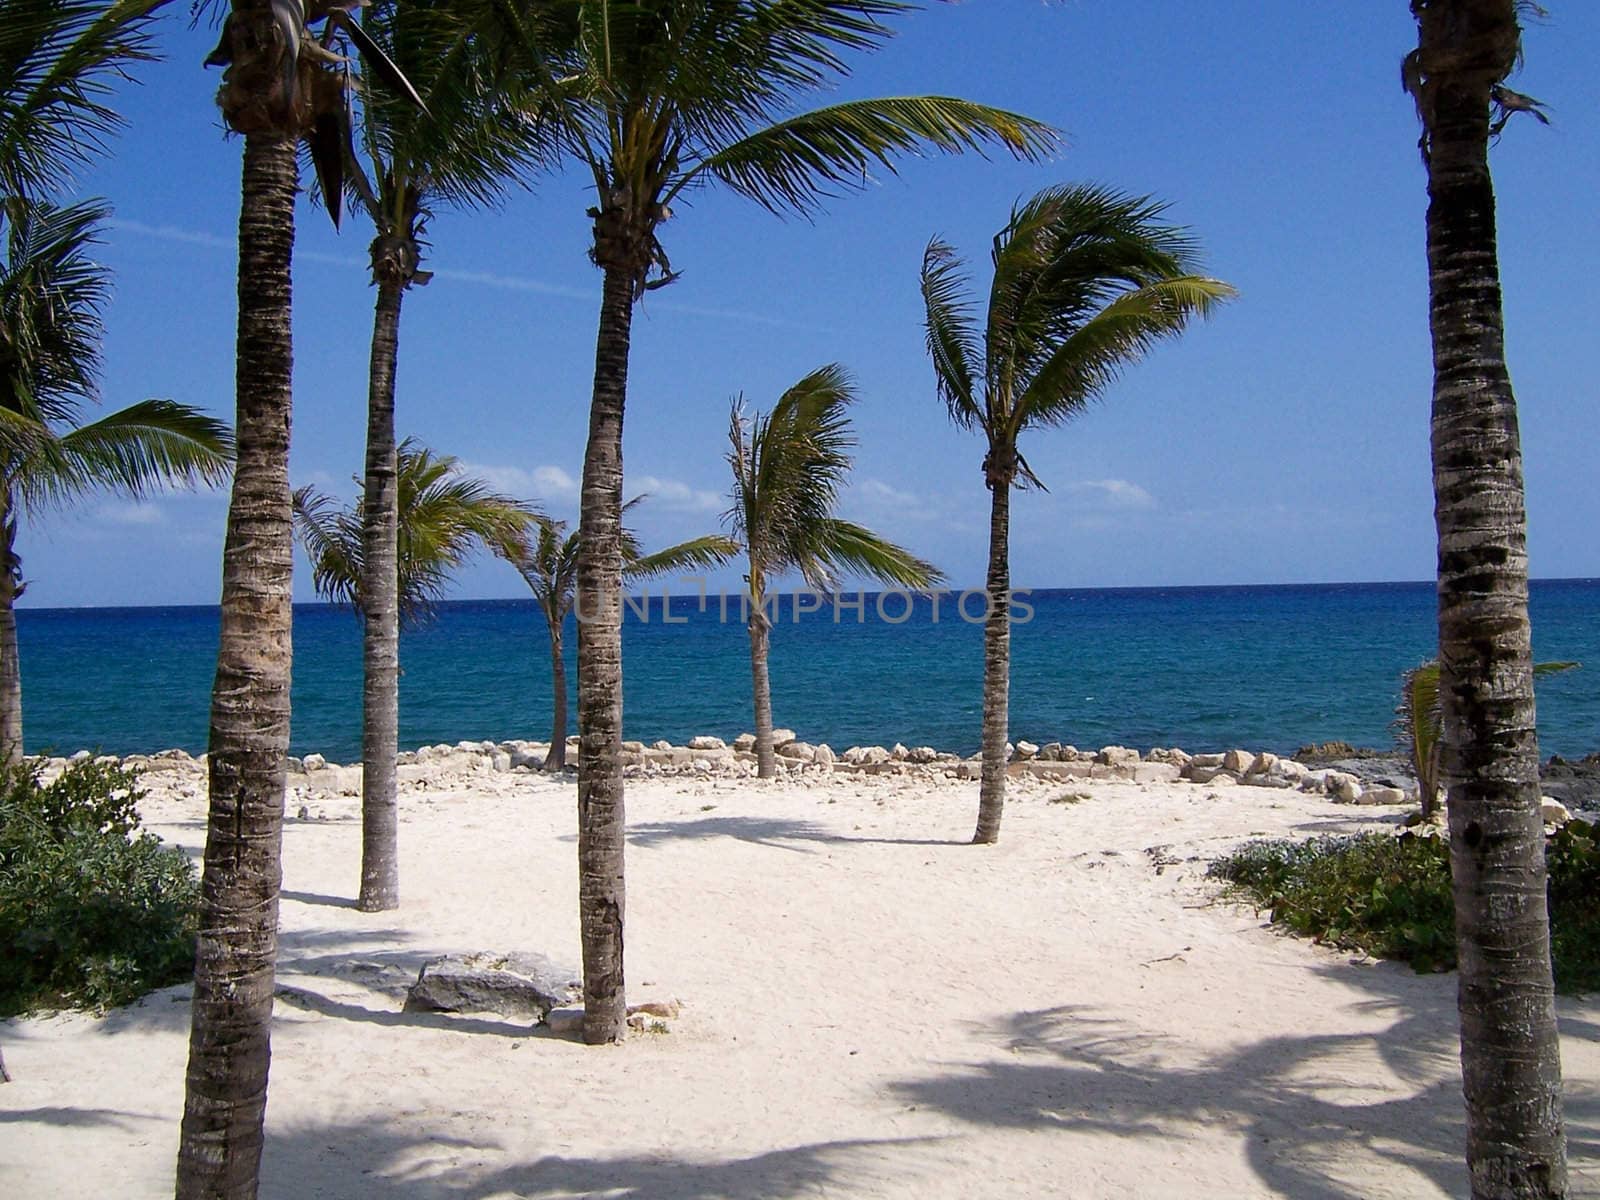 Very relaxing beach photograph at yucatan peninsula in Mexico.